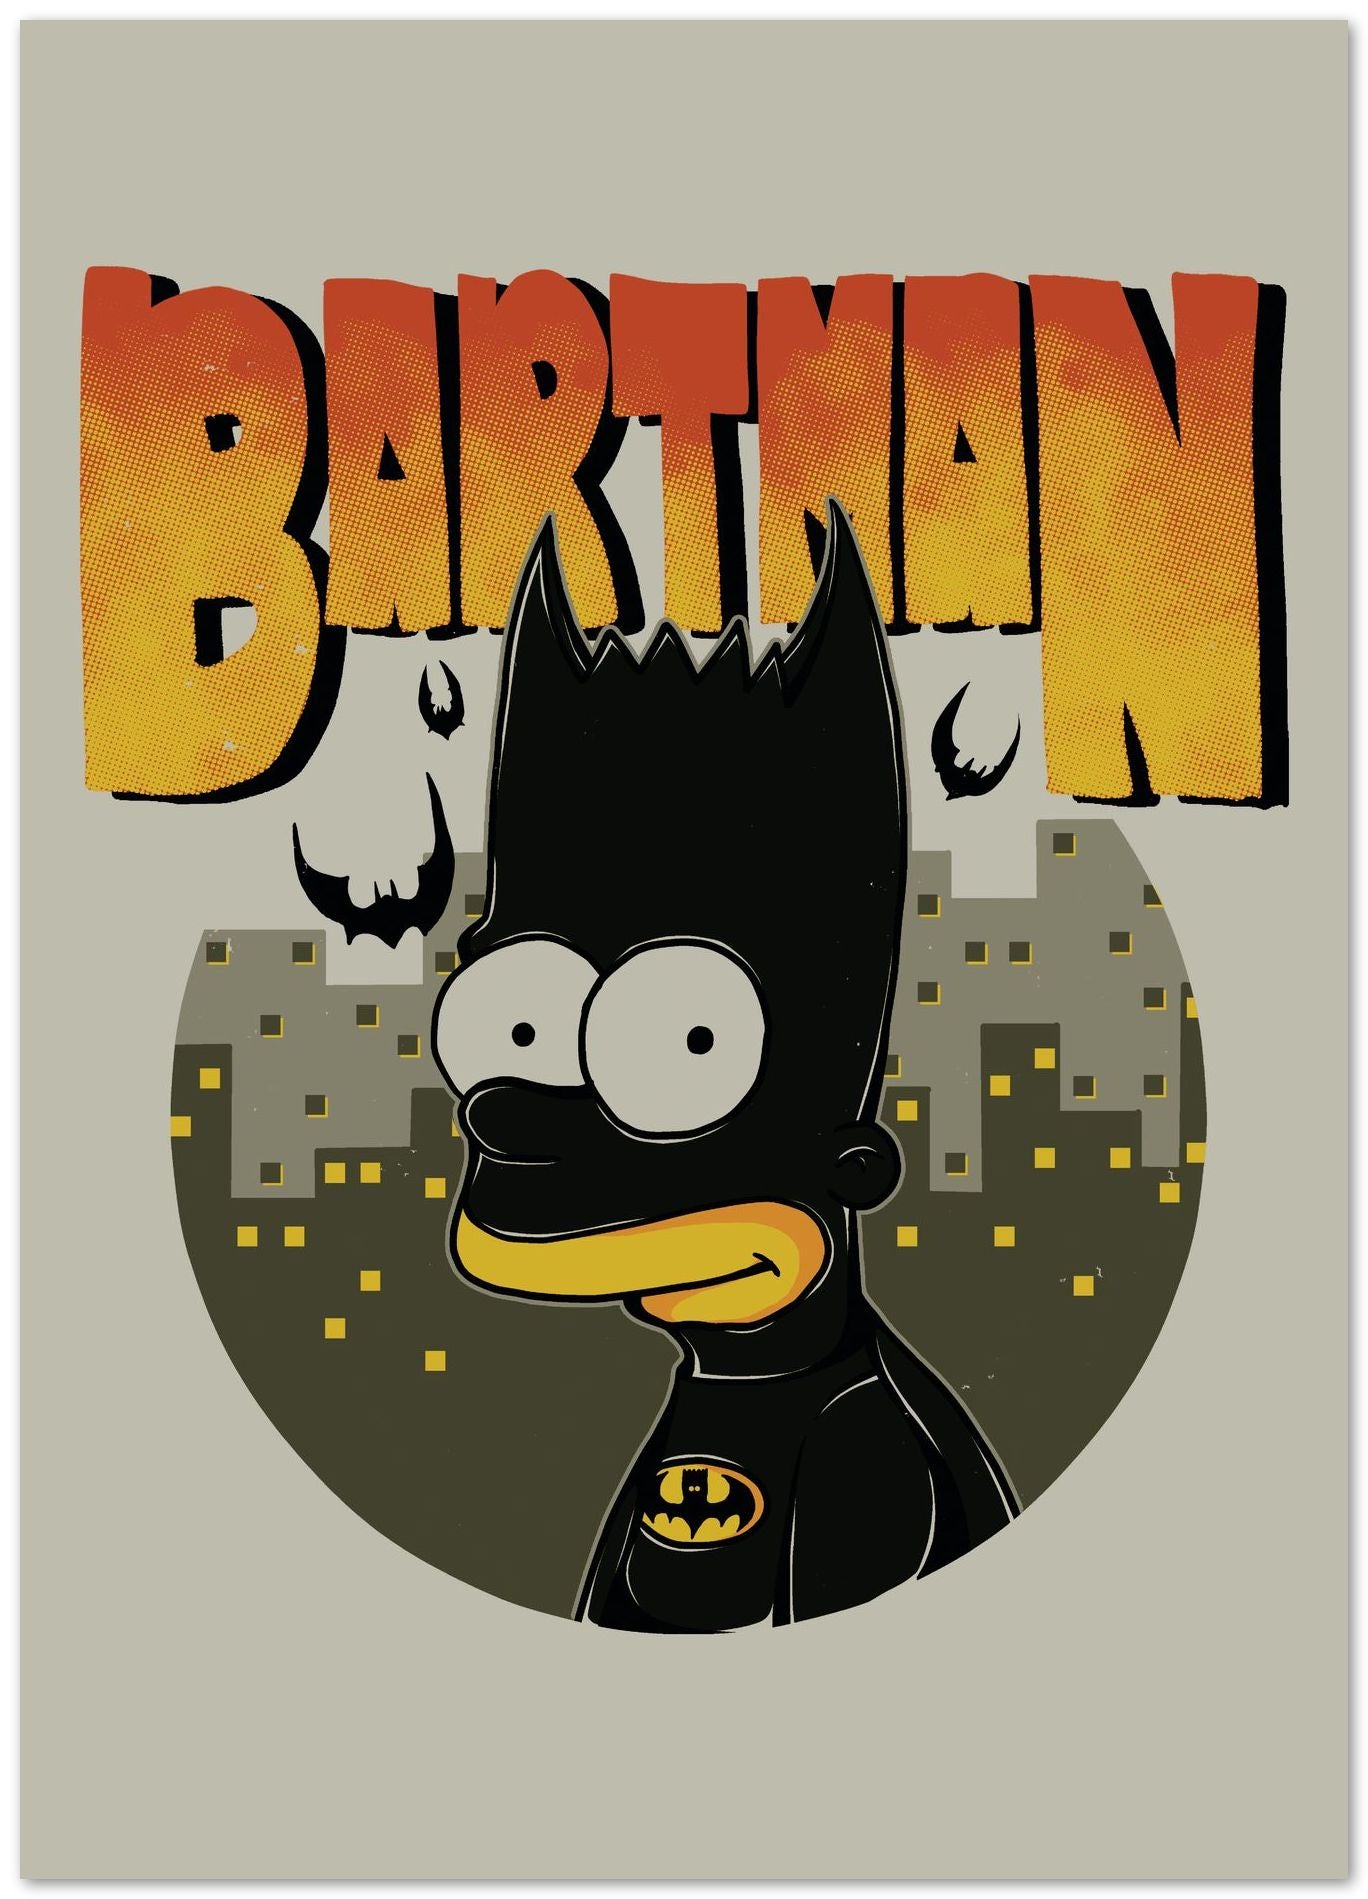 Bartman - @GODZILLARGE